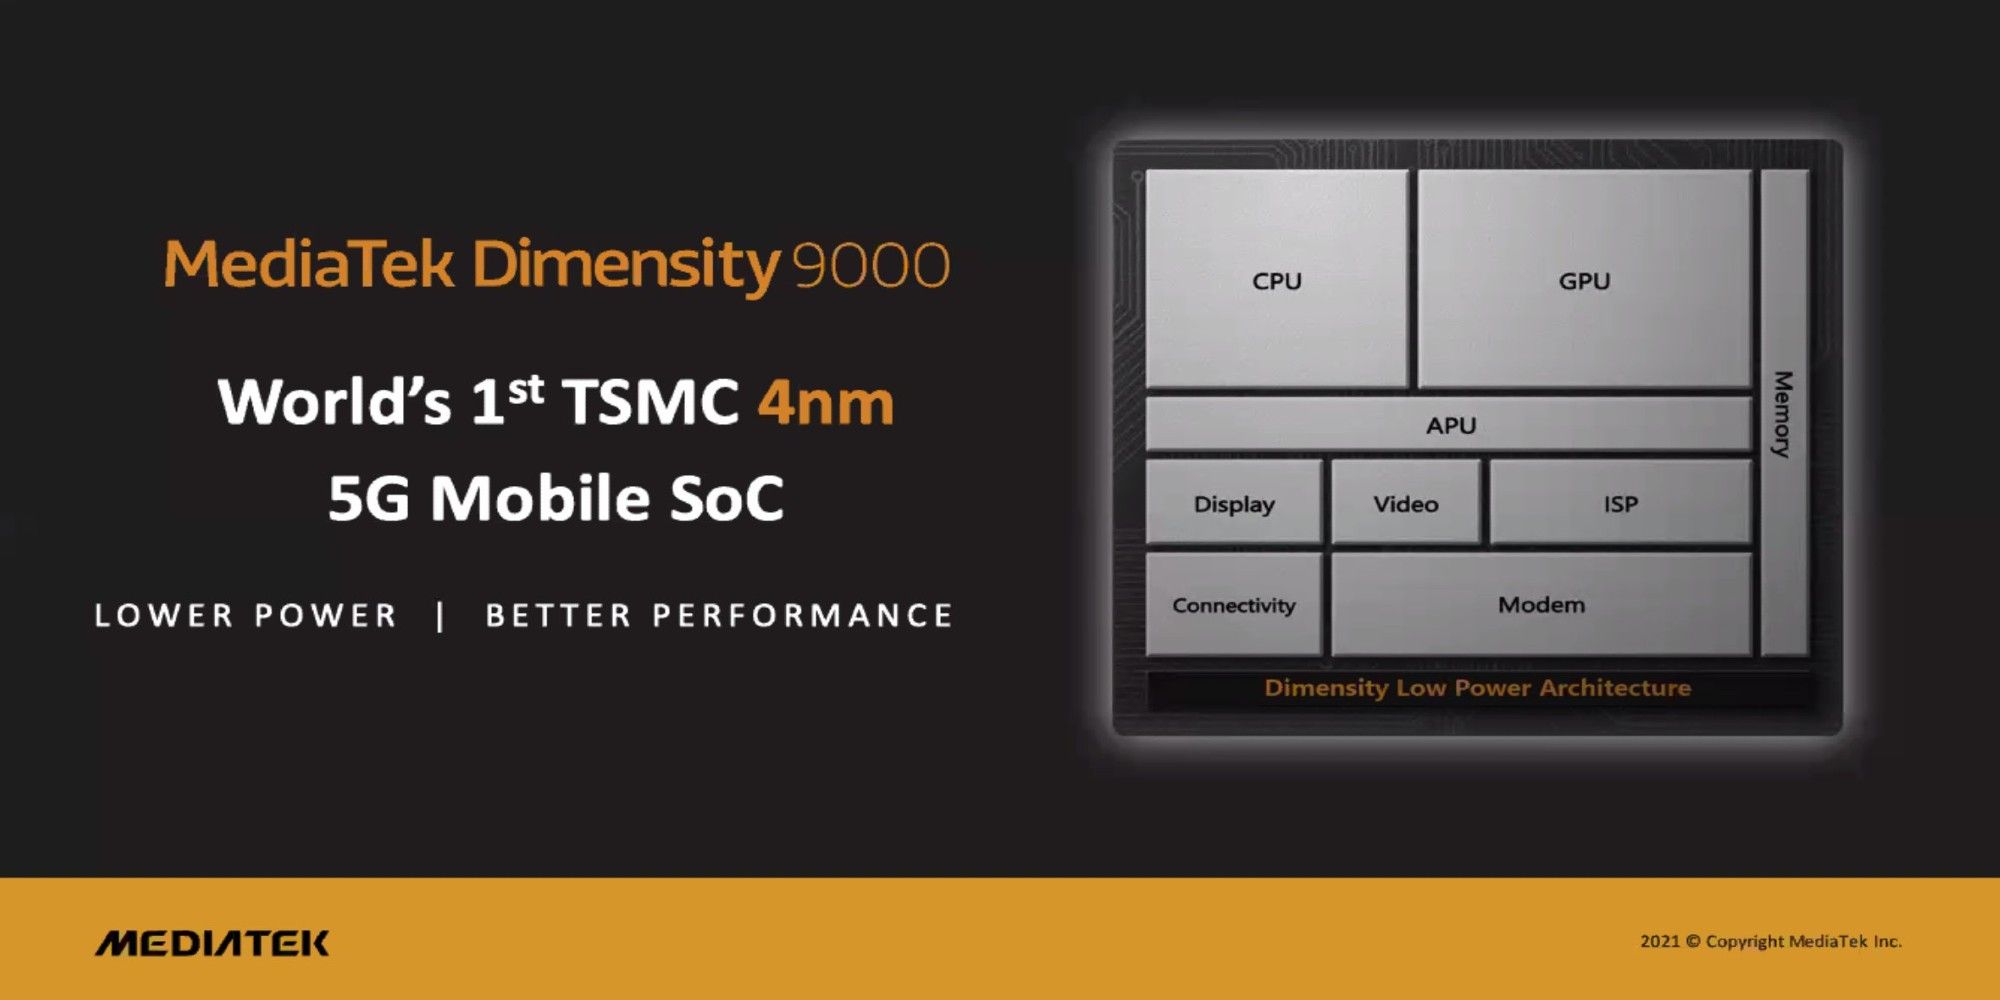 MediaTek's Dimensity 9000 has Arm's latest CPU and GPU